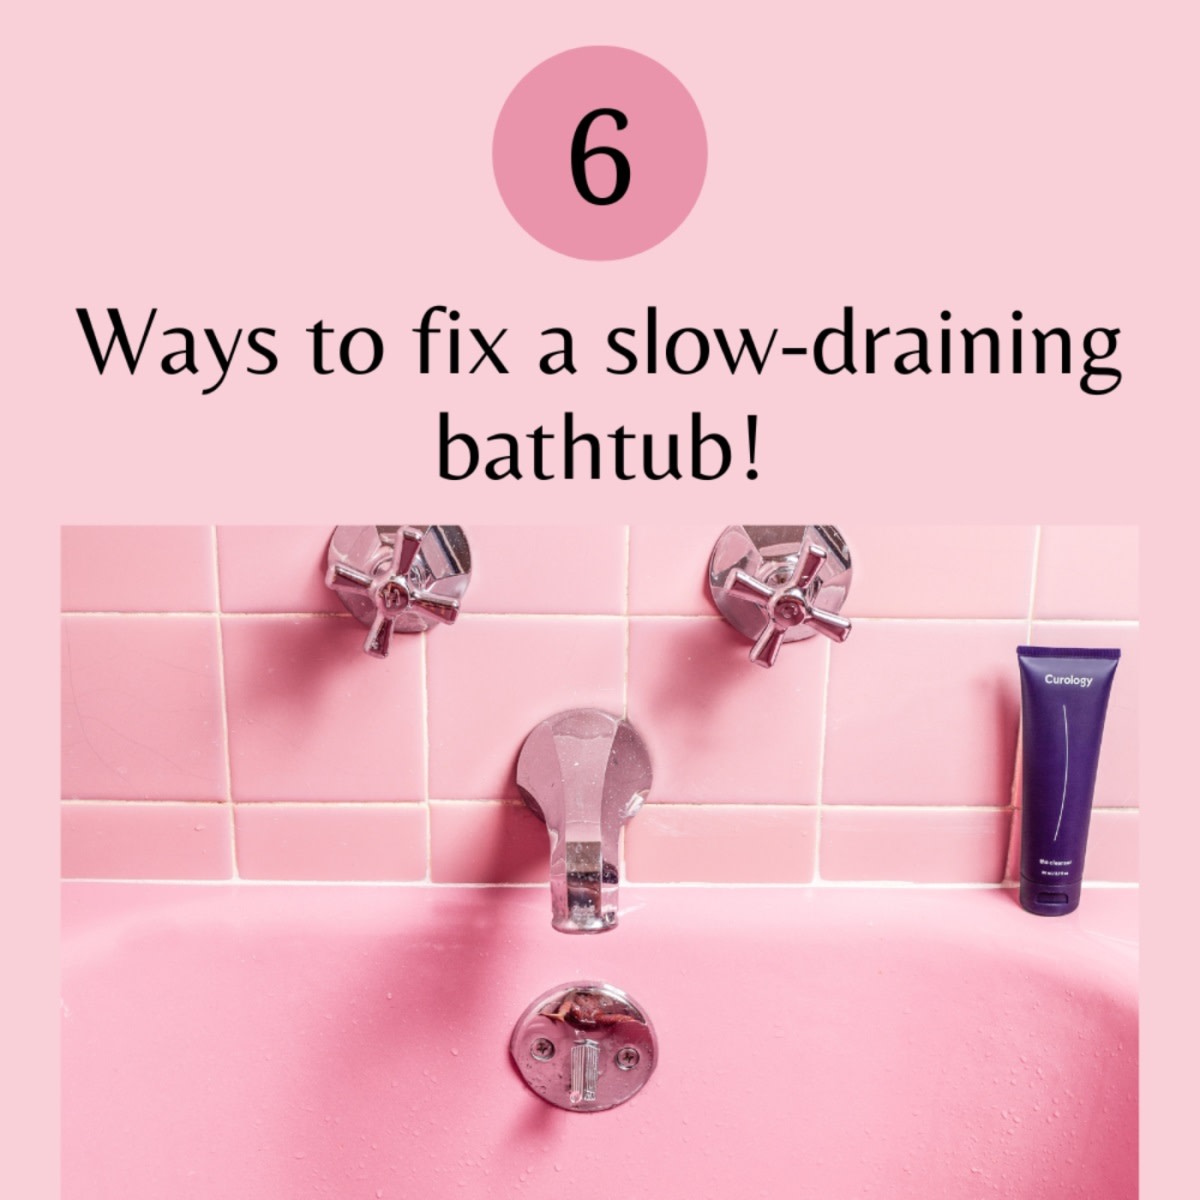 https://images.saymedia-content.com/.image/t_share/MjAxNDQzNTA4NTI2MDAwMDgw/ways-to-fix-a-slow-bathtub-drain.jpg